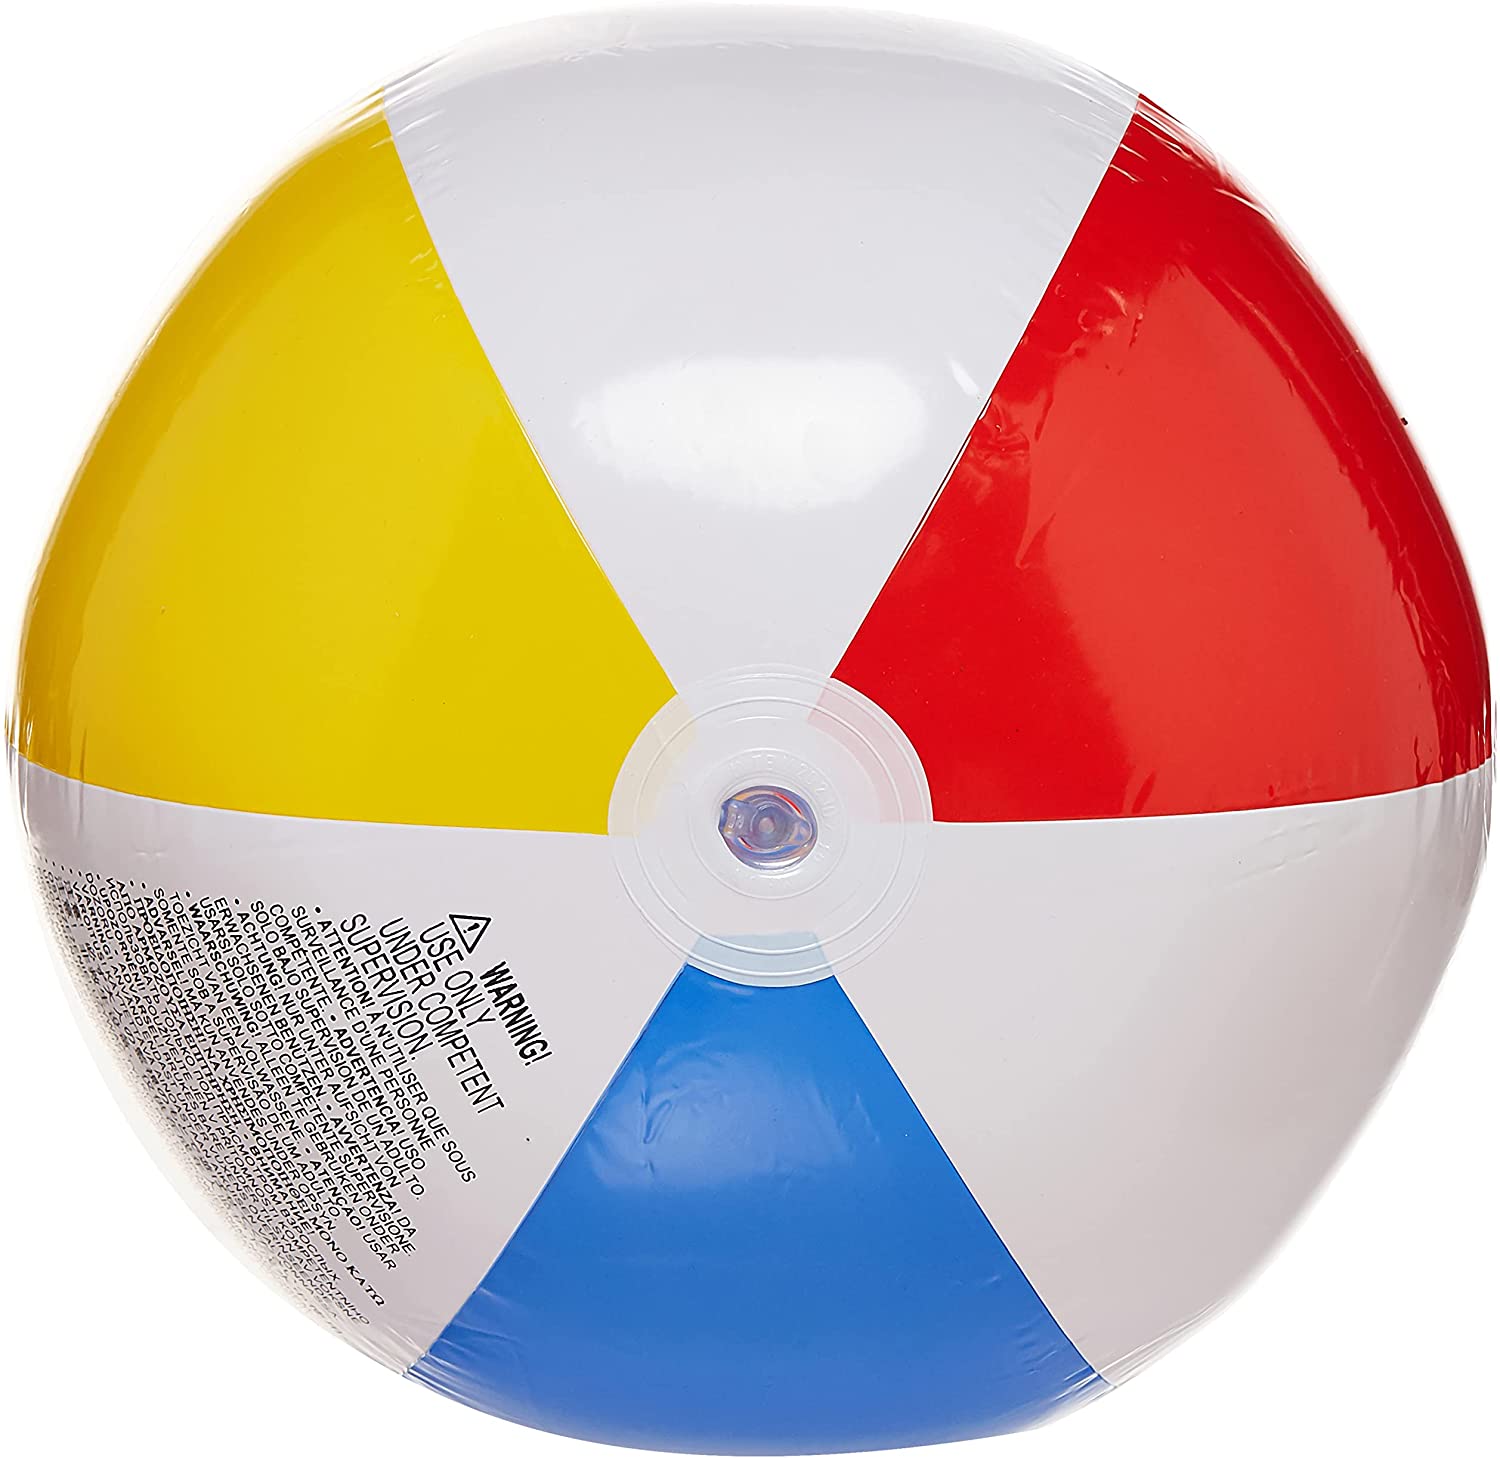 Intex Glossy Panel Ball, Multi-Colour, 59020